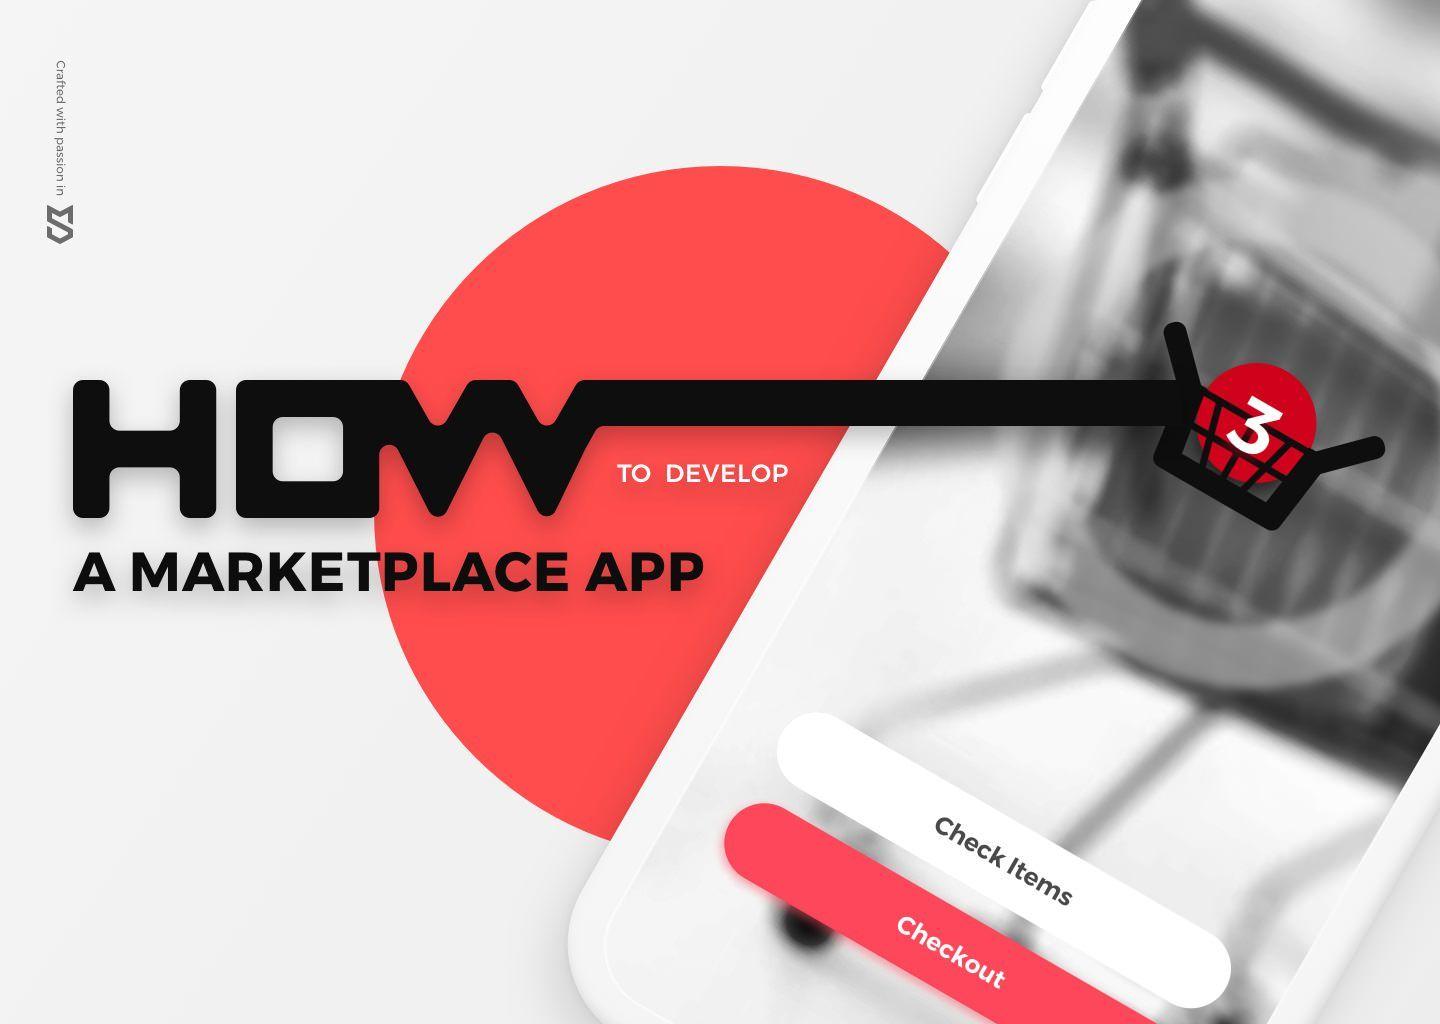 Letgo App Logo - How to Make a Marketplace App Like Letgo?